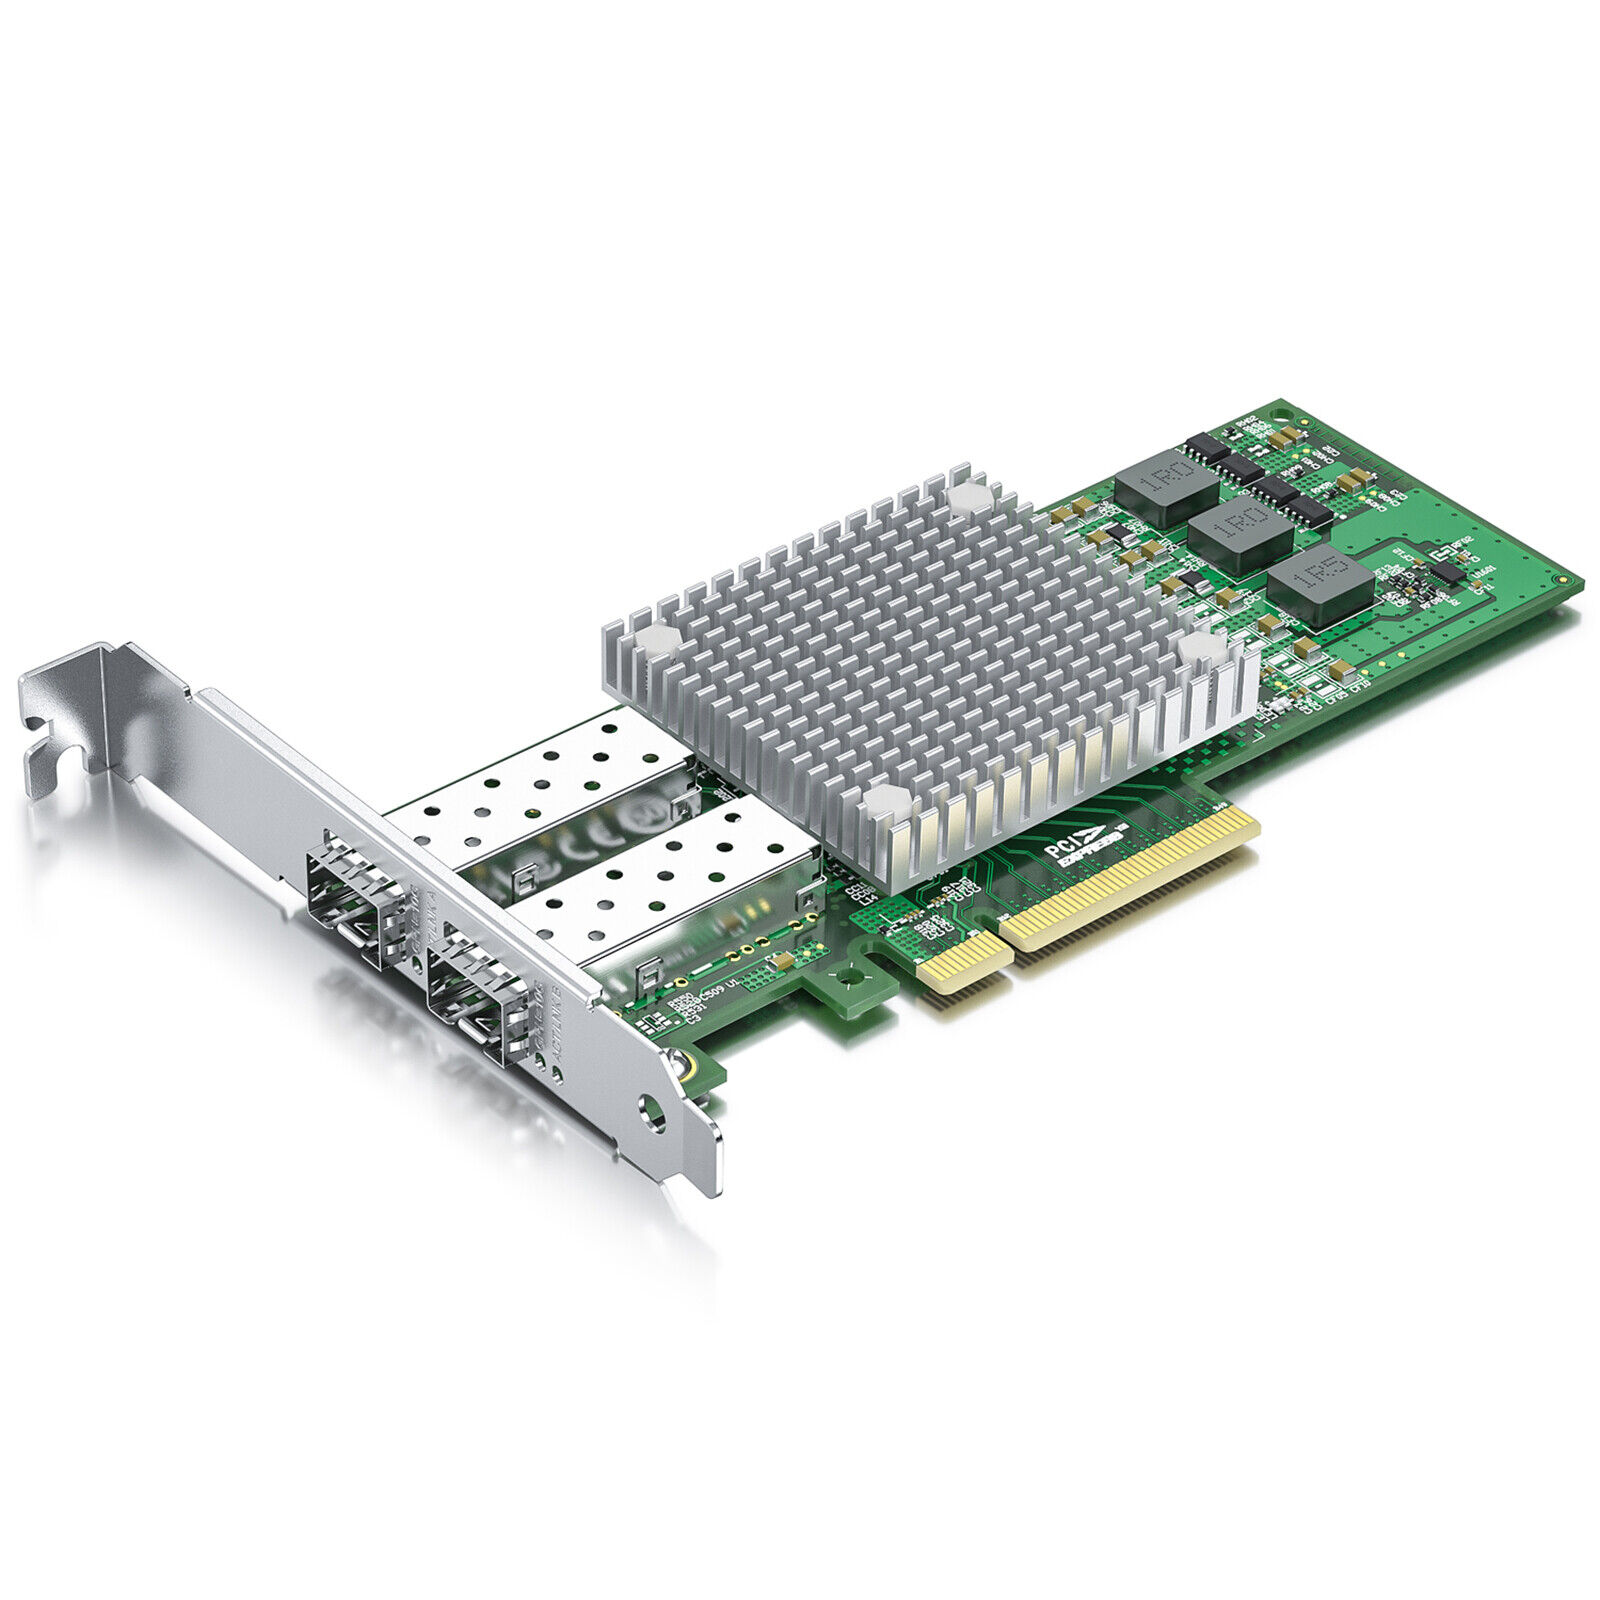 For Broadcom 57810S 10Gb Ethernet Network Card PCIe x8 Card Dual SFP+ Ports